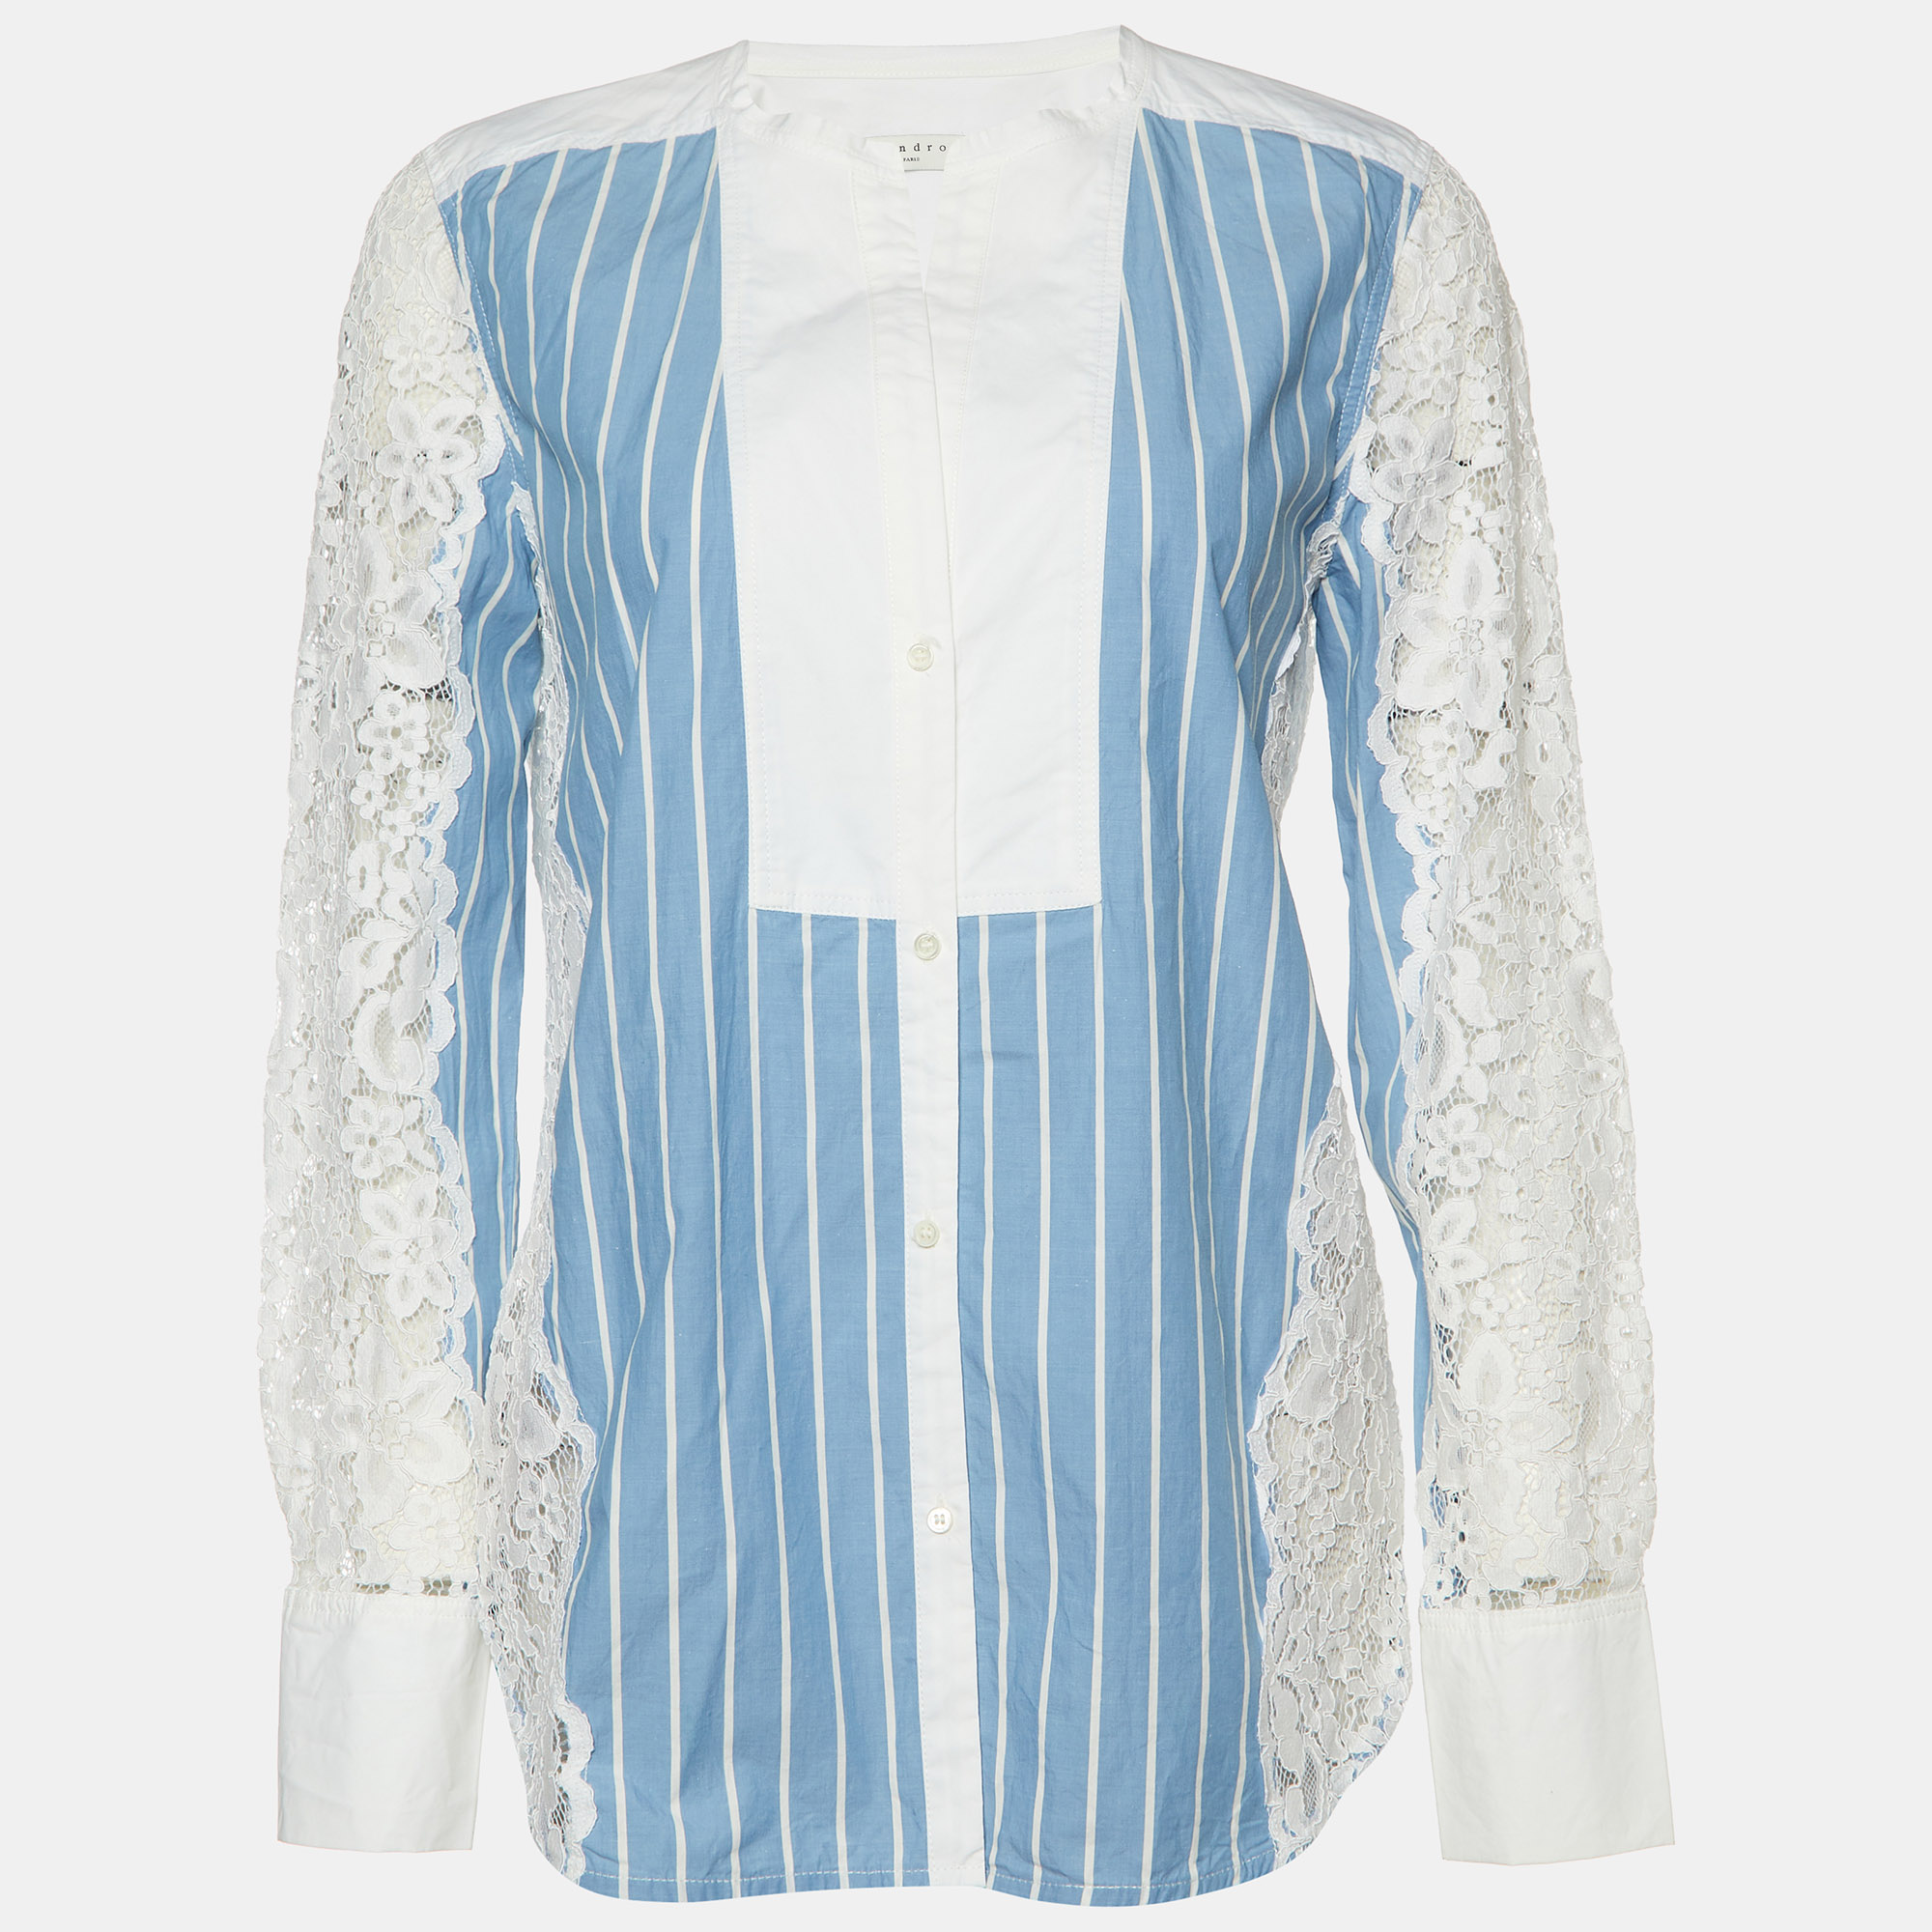 Sandro blue striped cotton & lace shirt s